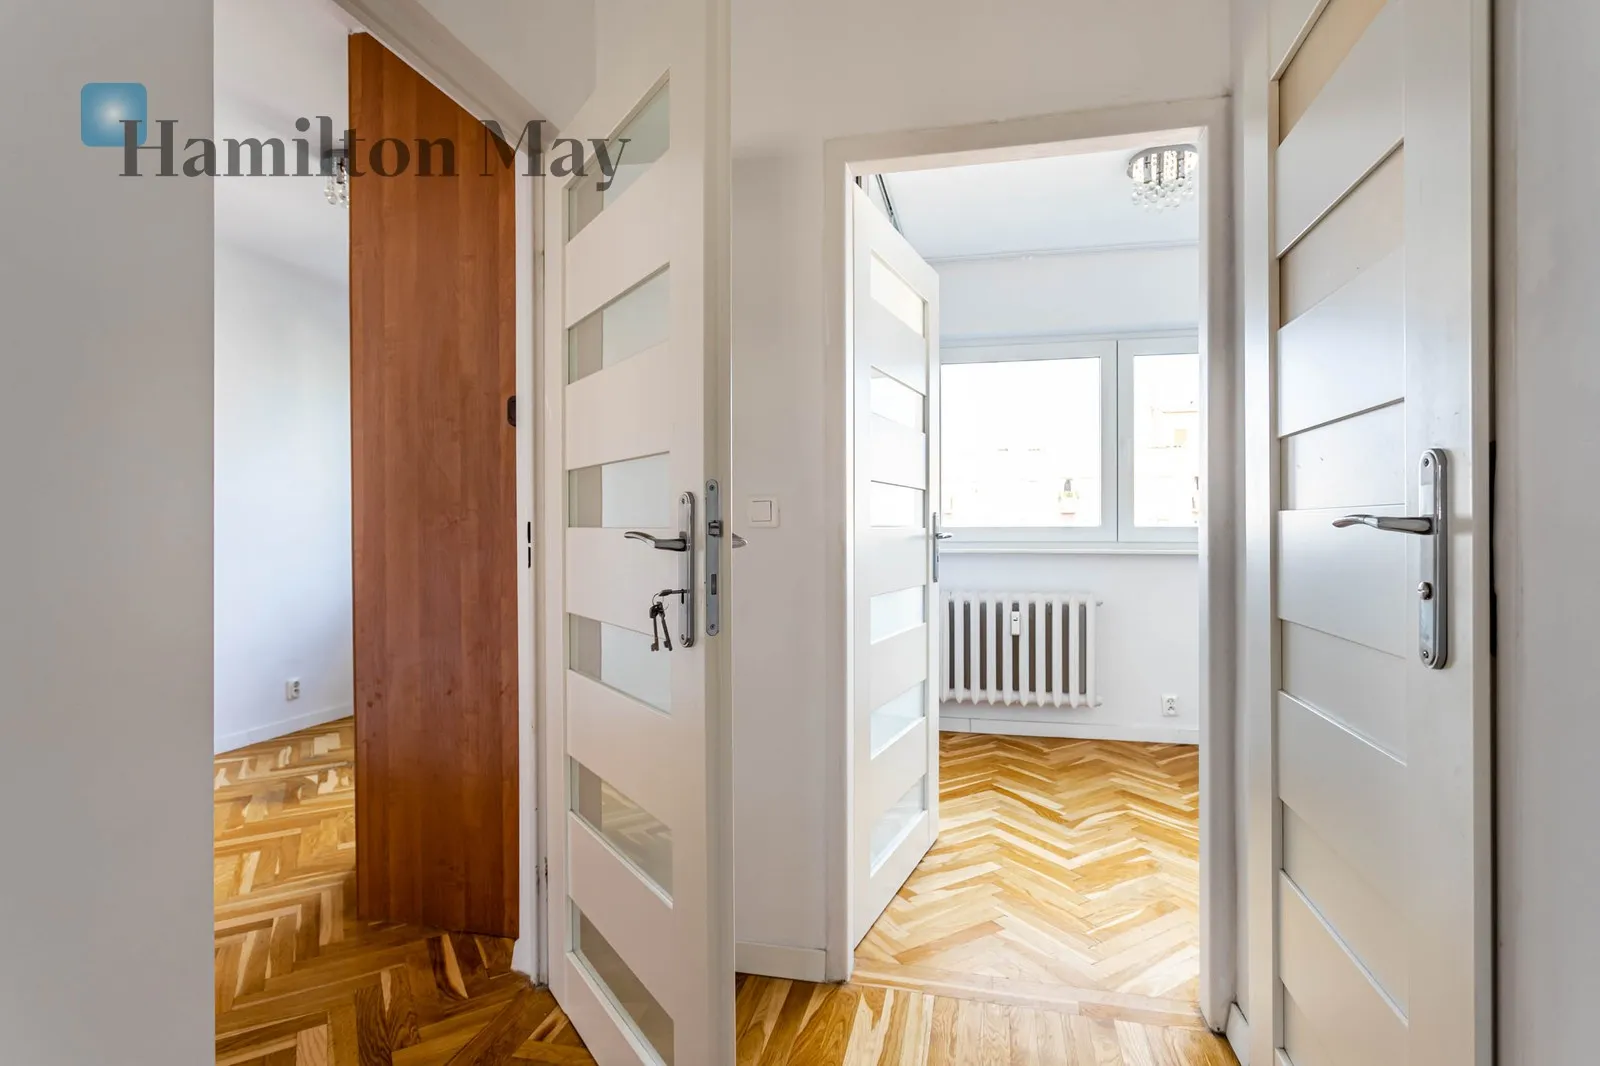 Region: Mokotów Subregion: Stary Mokotów Distance to centre: 3.36 km Level: 9 Price: 899000 PLN Bedrooms: 2 Bathrooms: 1 Size: 51m2